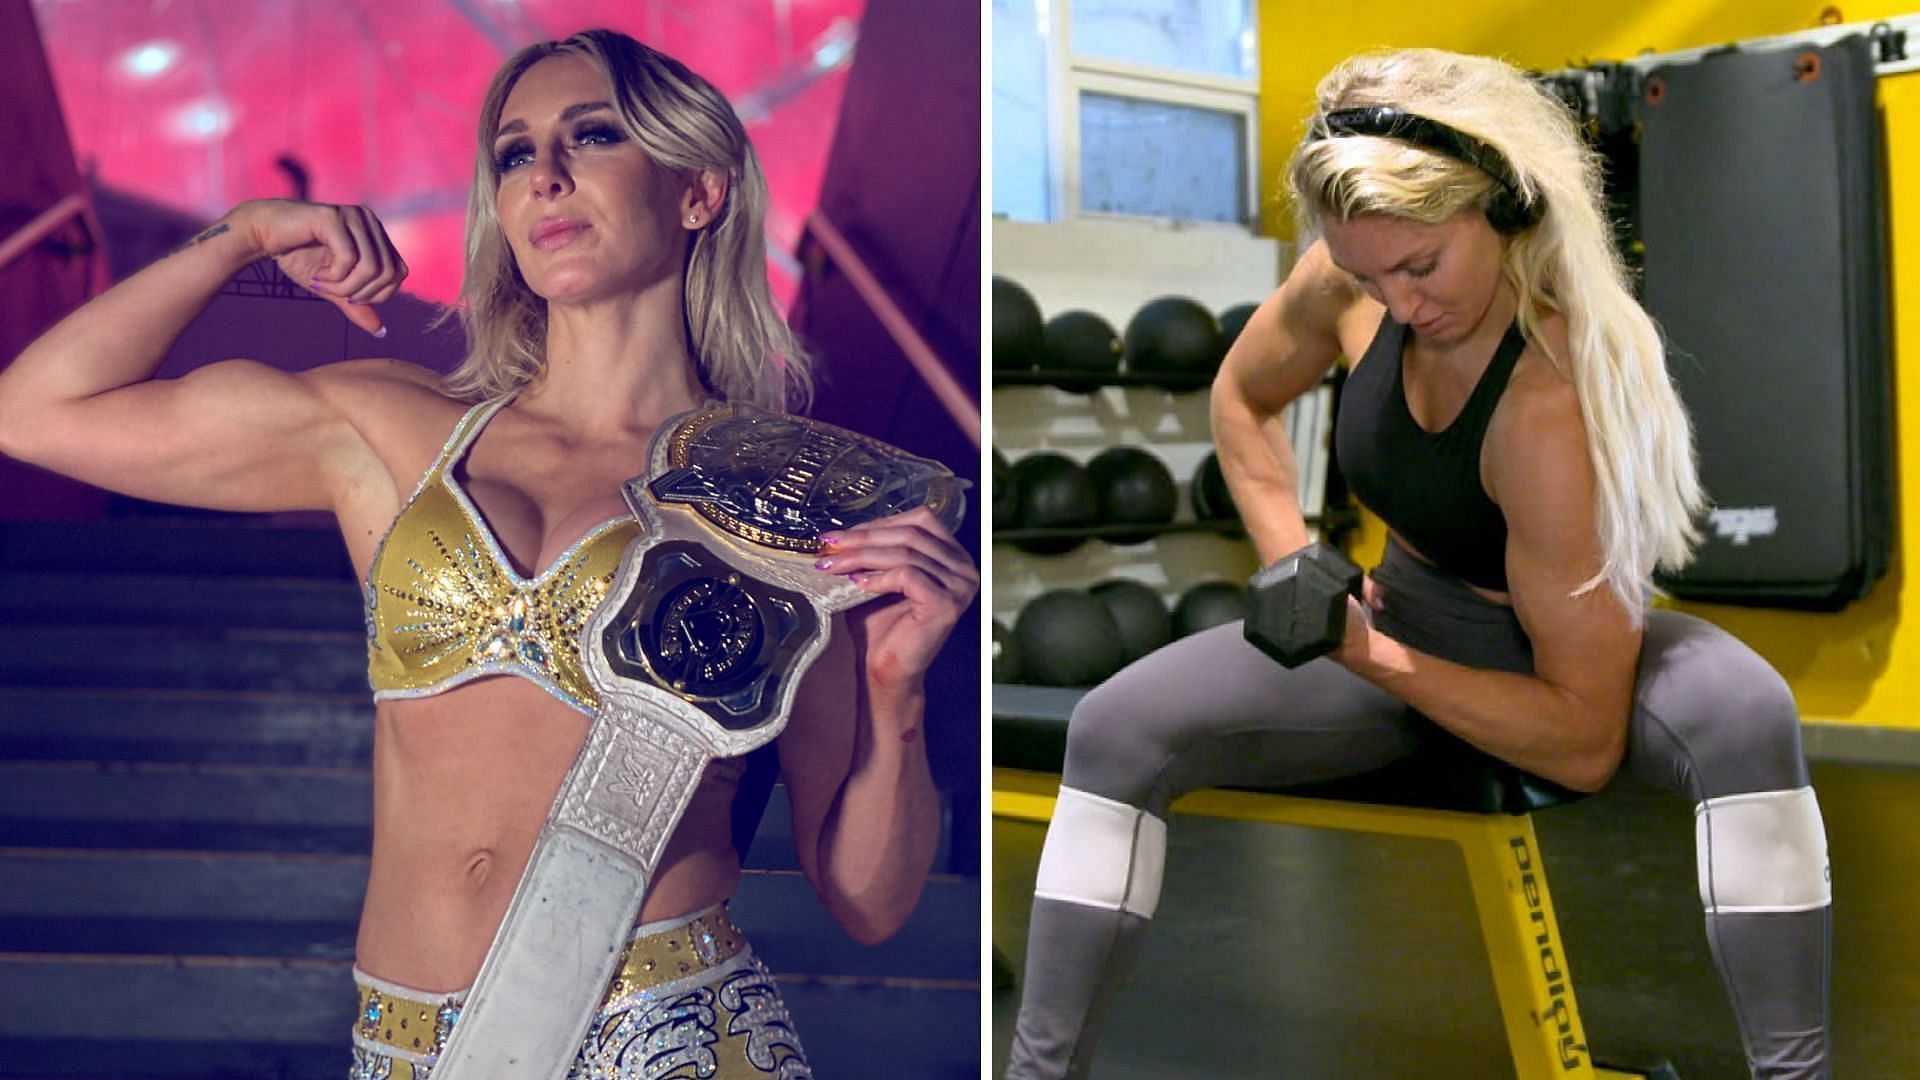 Charlotte Flair is huge name in WWE